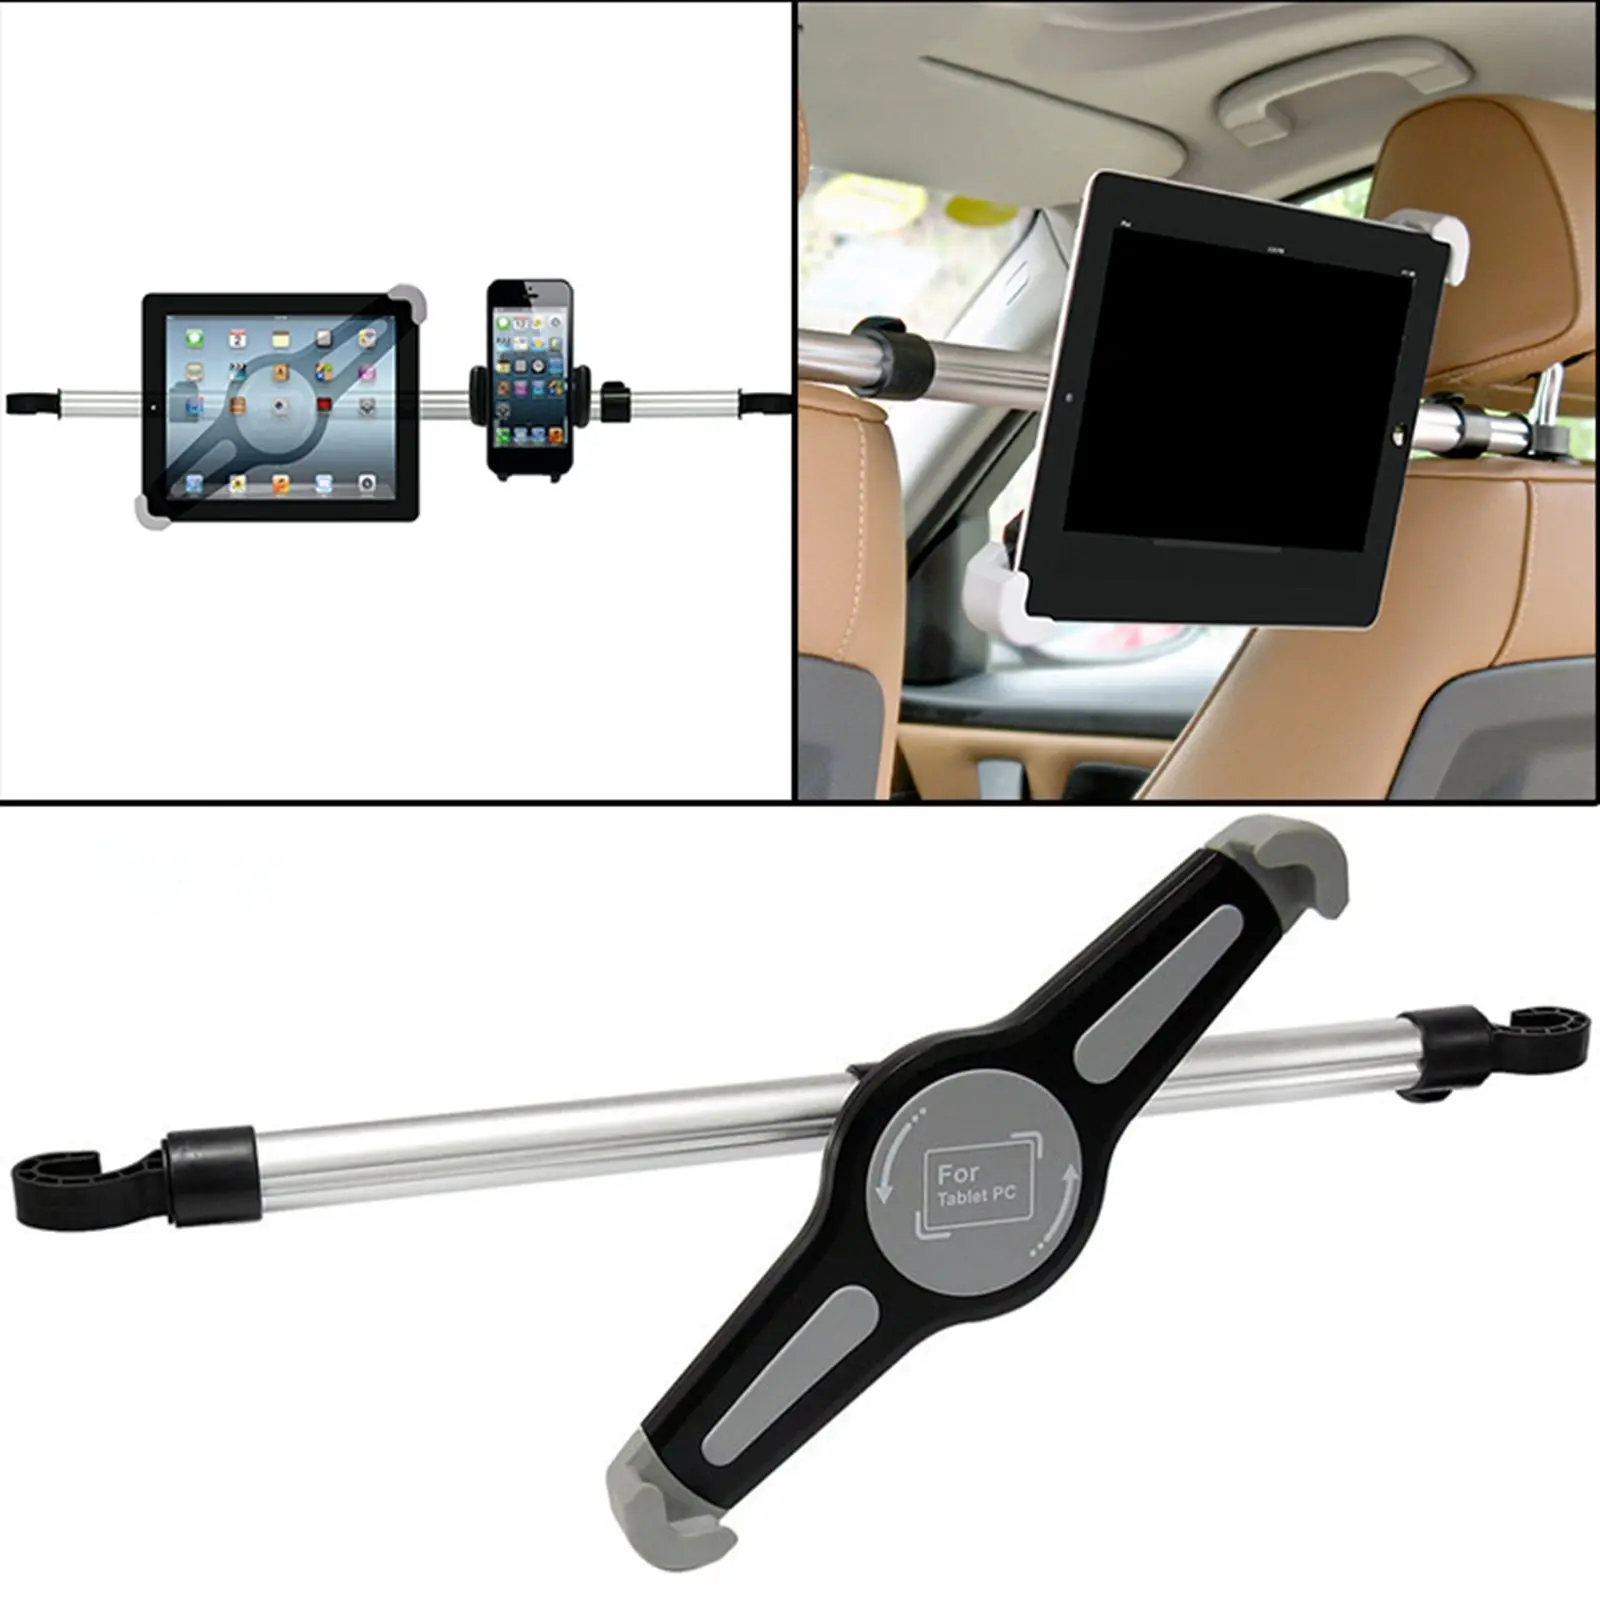 Aluminum Universal Car Headrest Mount Tablet Holder Back Seat 360° Mounts Stand Rubber inside the holder, anti-scratch